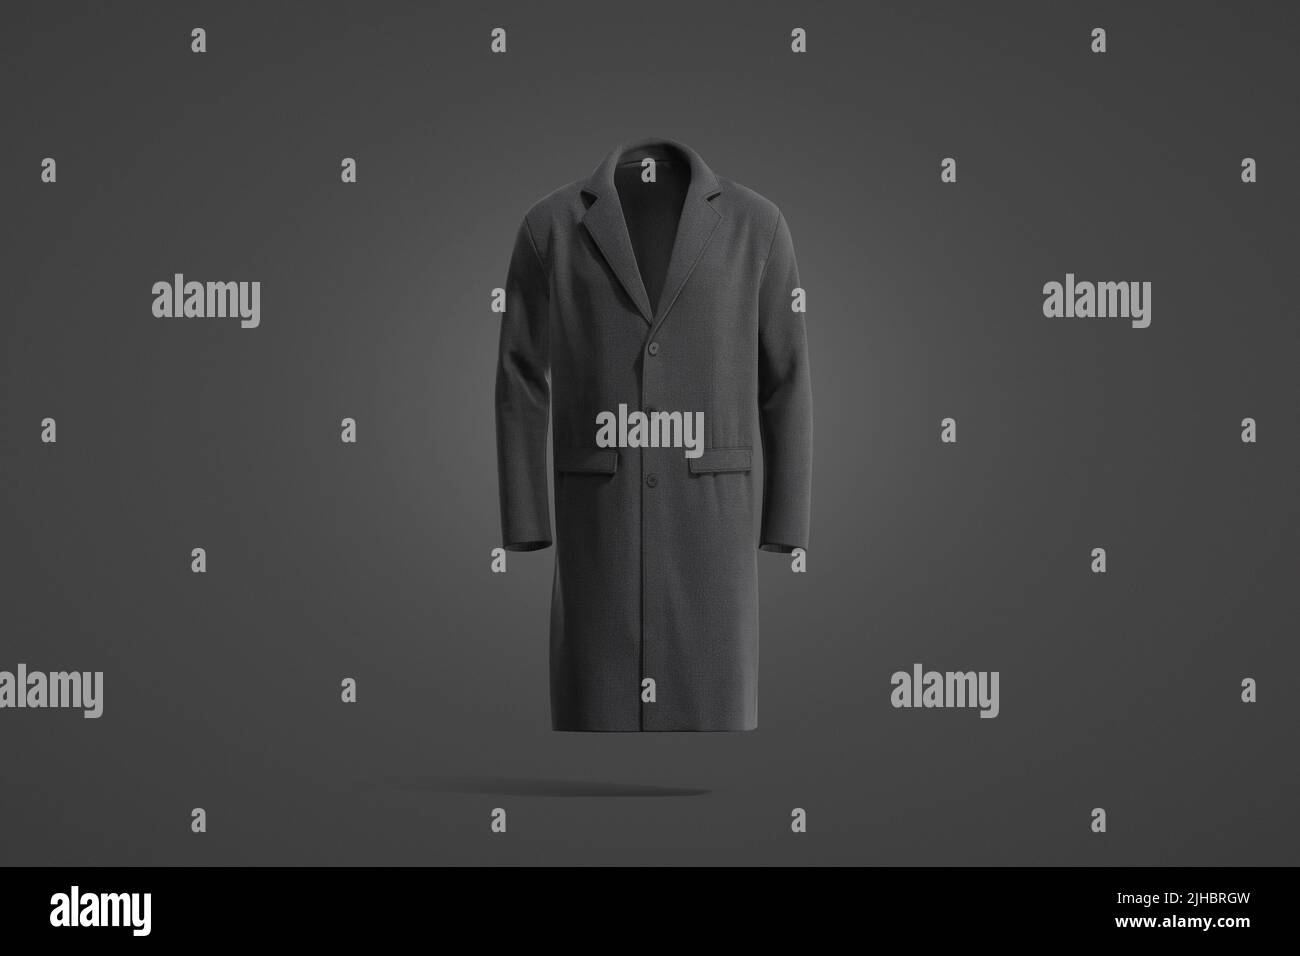 Mockup de abrigo de lana negra en blanco, fondo oscuro Foto de stock